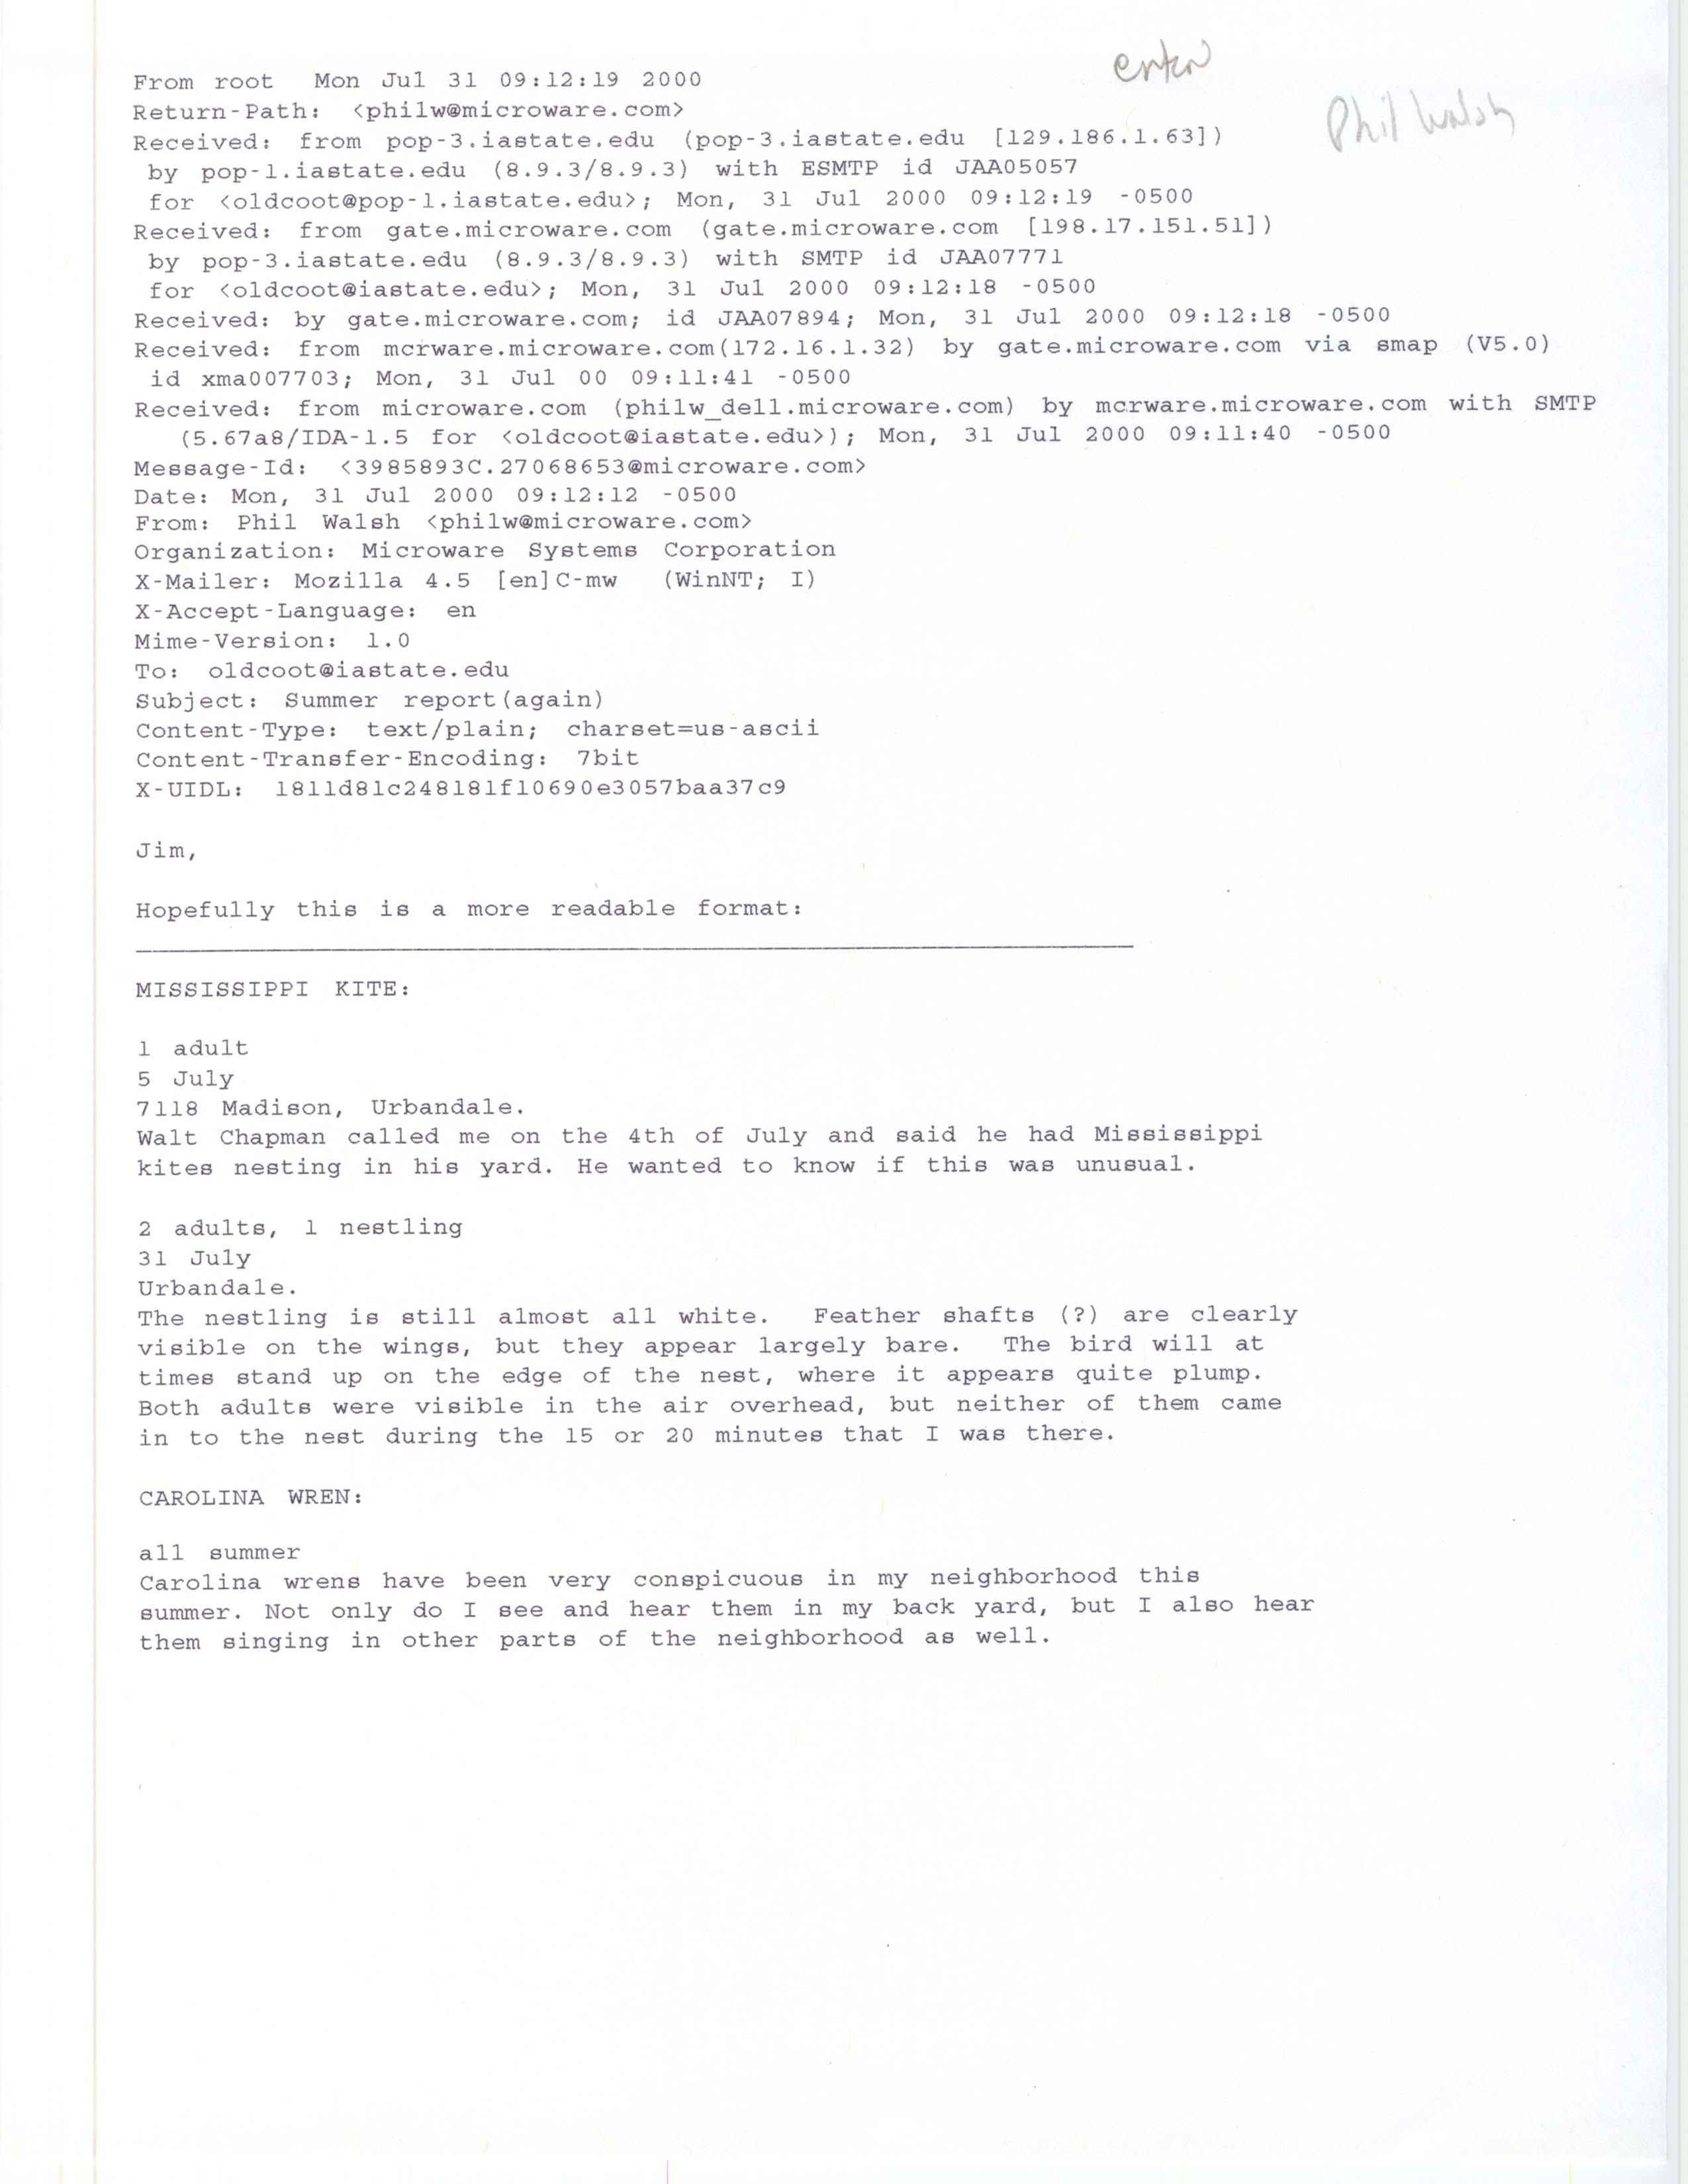 Philip J. Walsh email to James J. Dinsmore regarding summer bird sightings, July 31, 2000